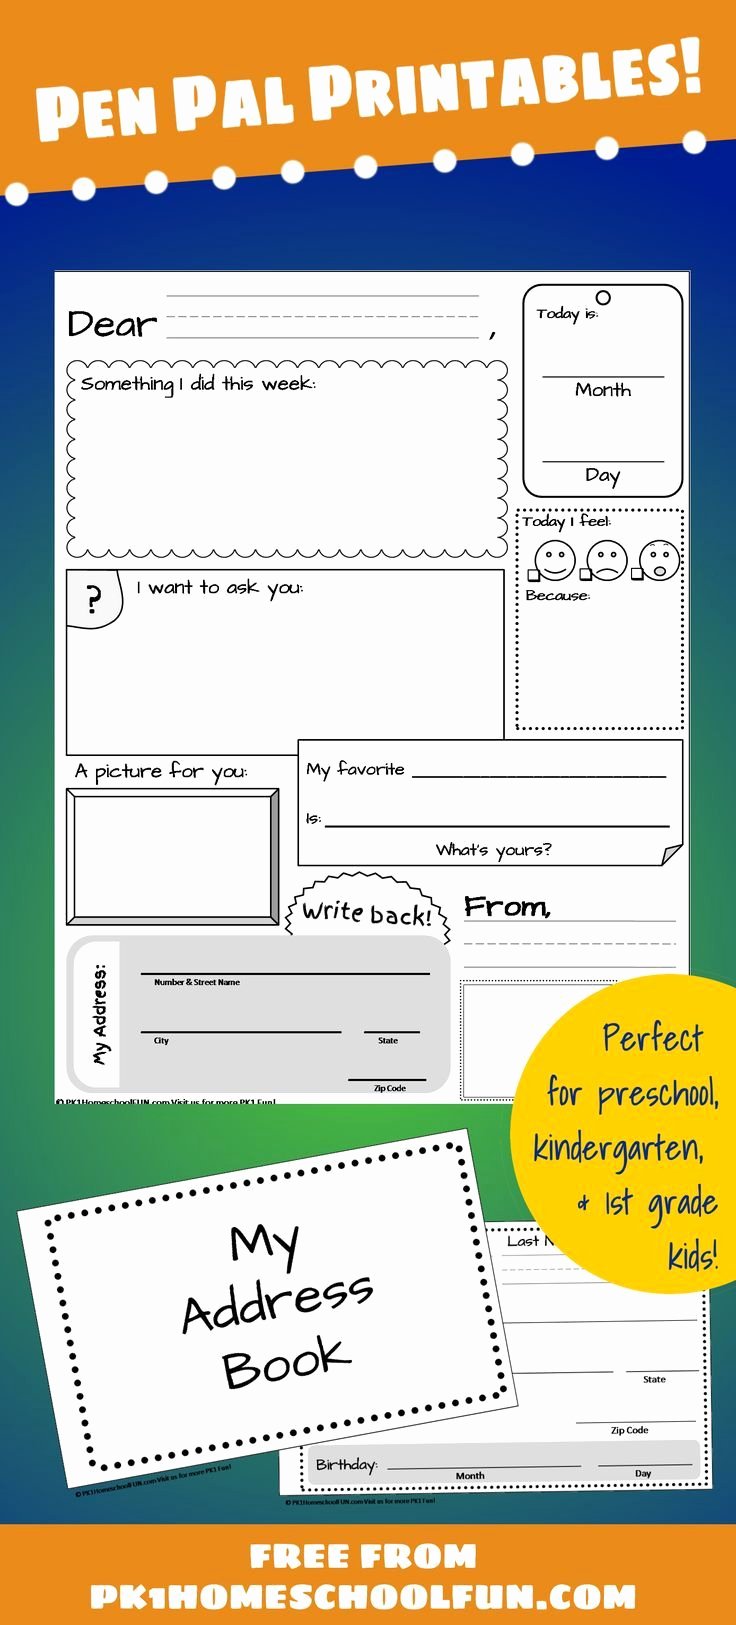 Pen Pal Letter Template Inspirational Free Pen Pal Printables for Kids Handwriting